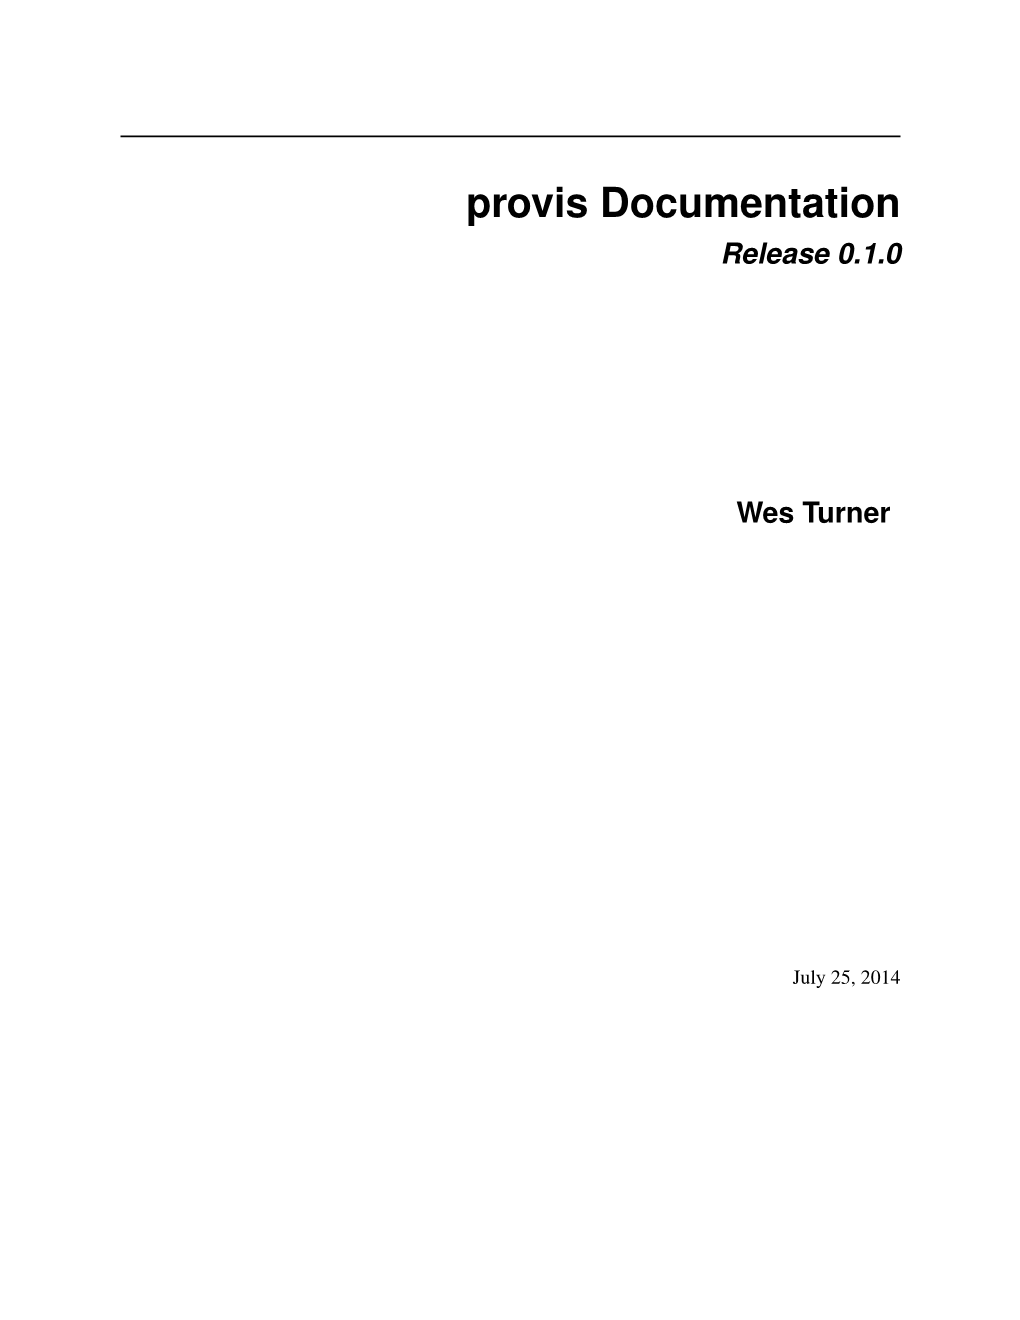 Provis Documentation Release 0.1.0